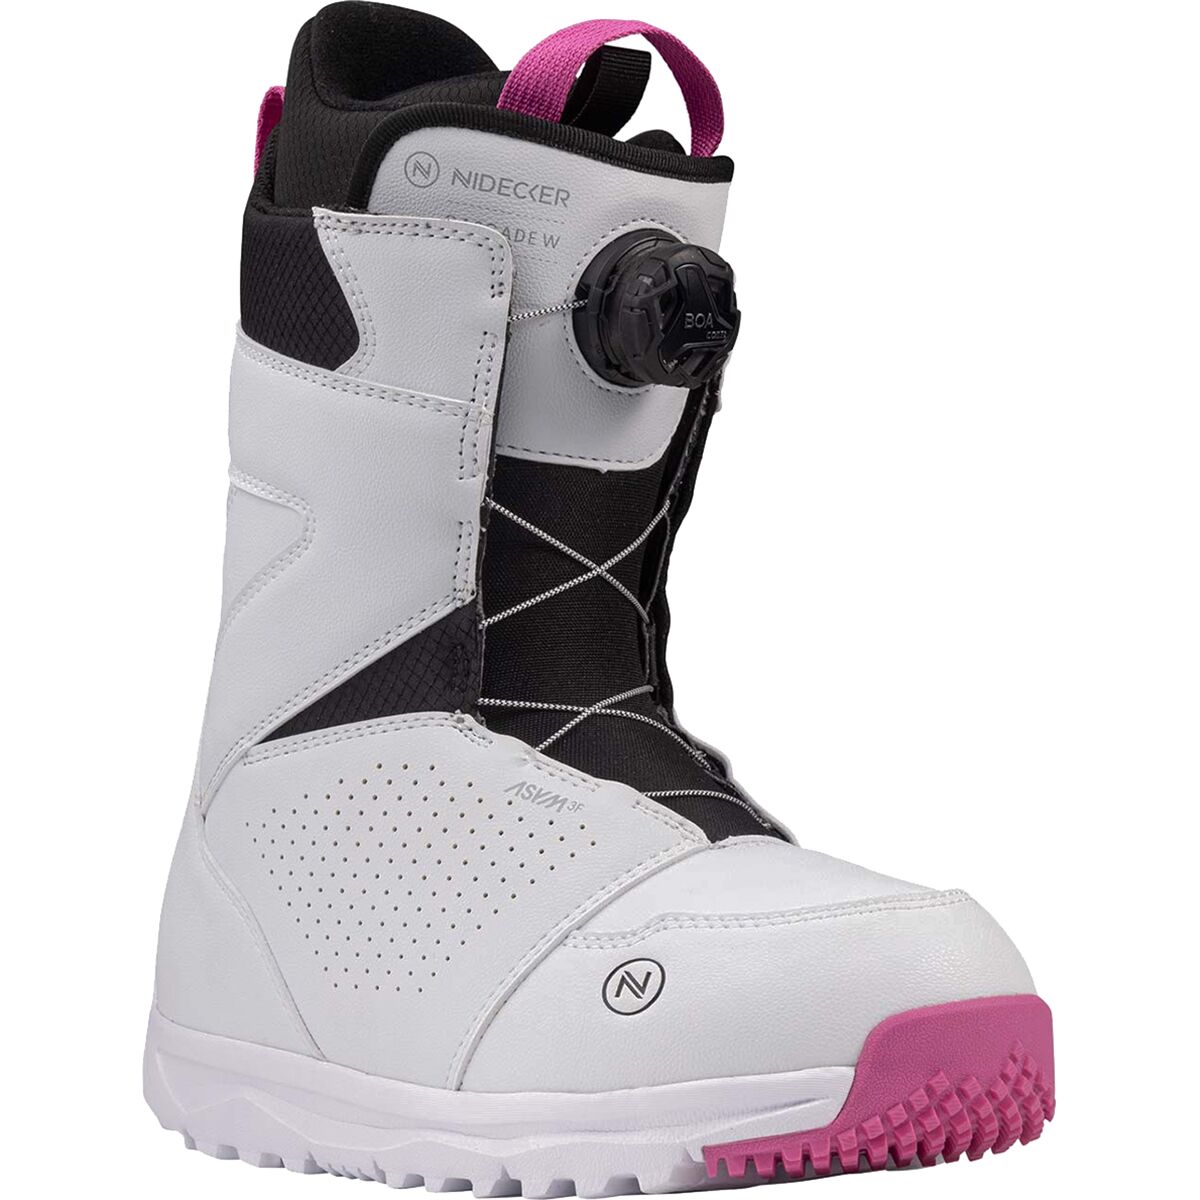 Nidecker Cascade Snowboard Boot - Women's White